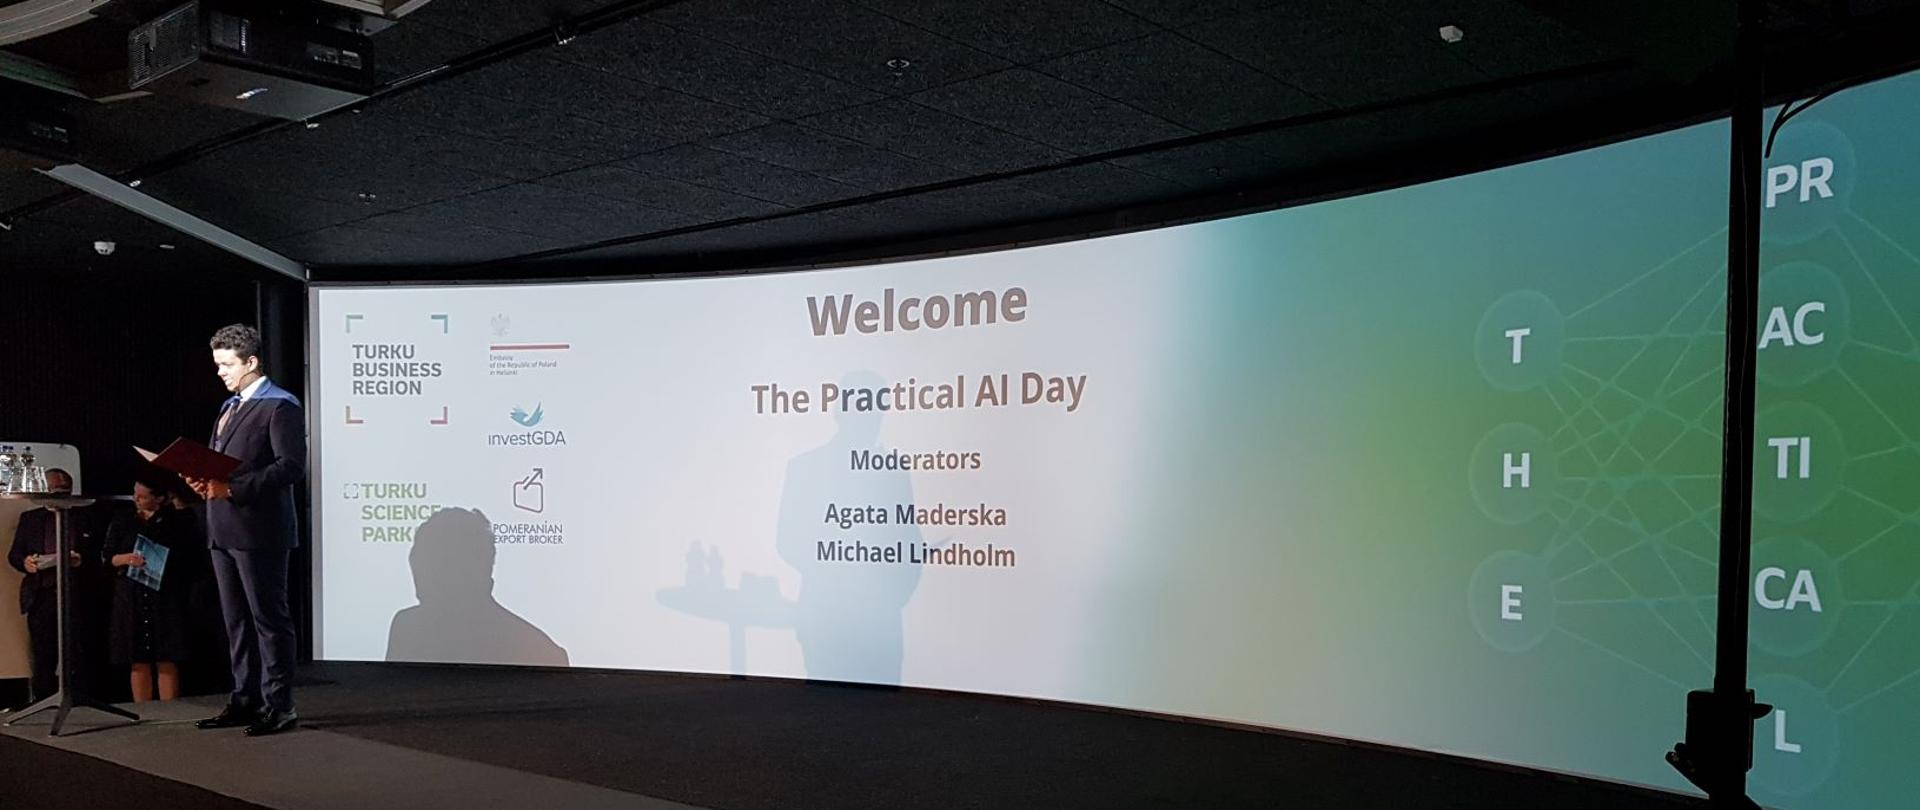 The practical AI day in Turku